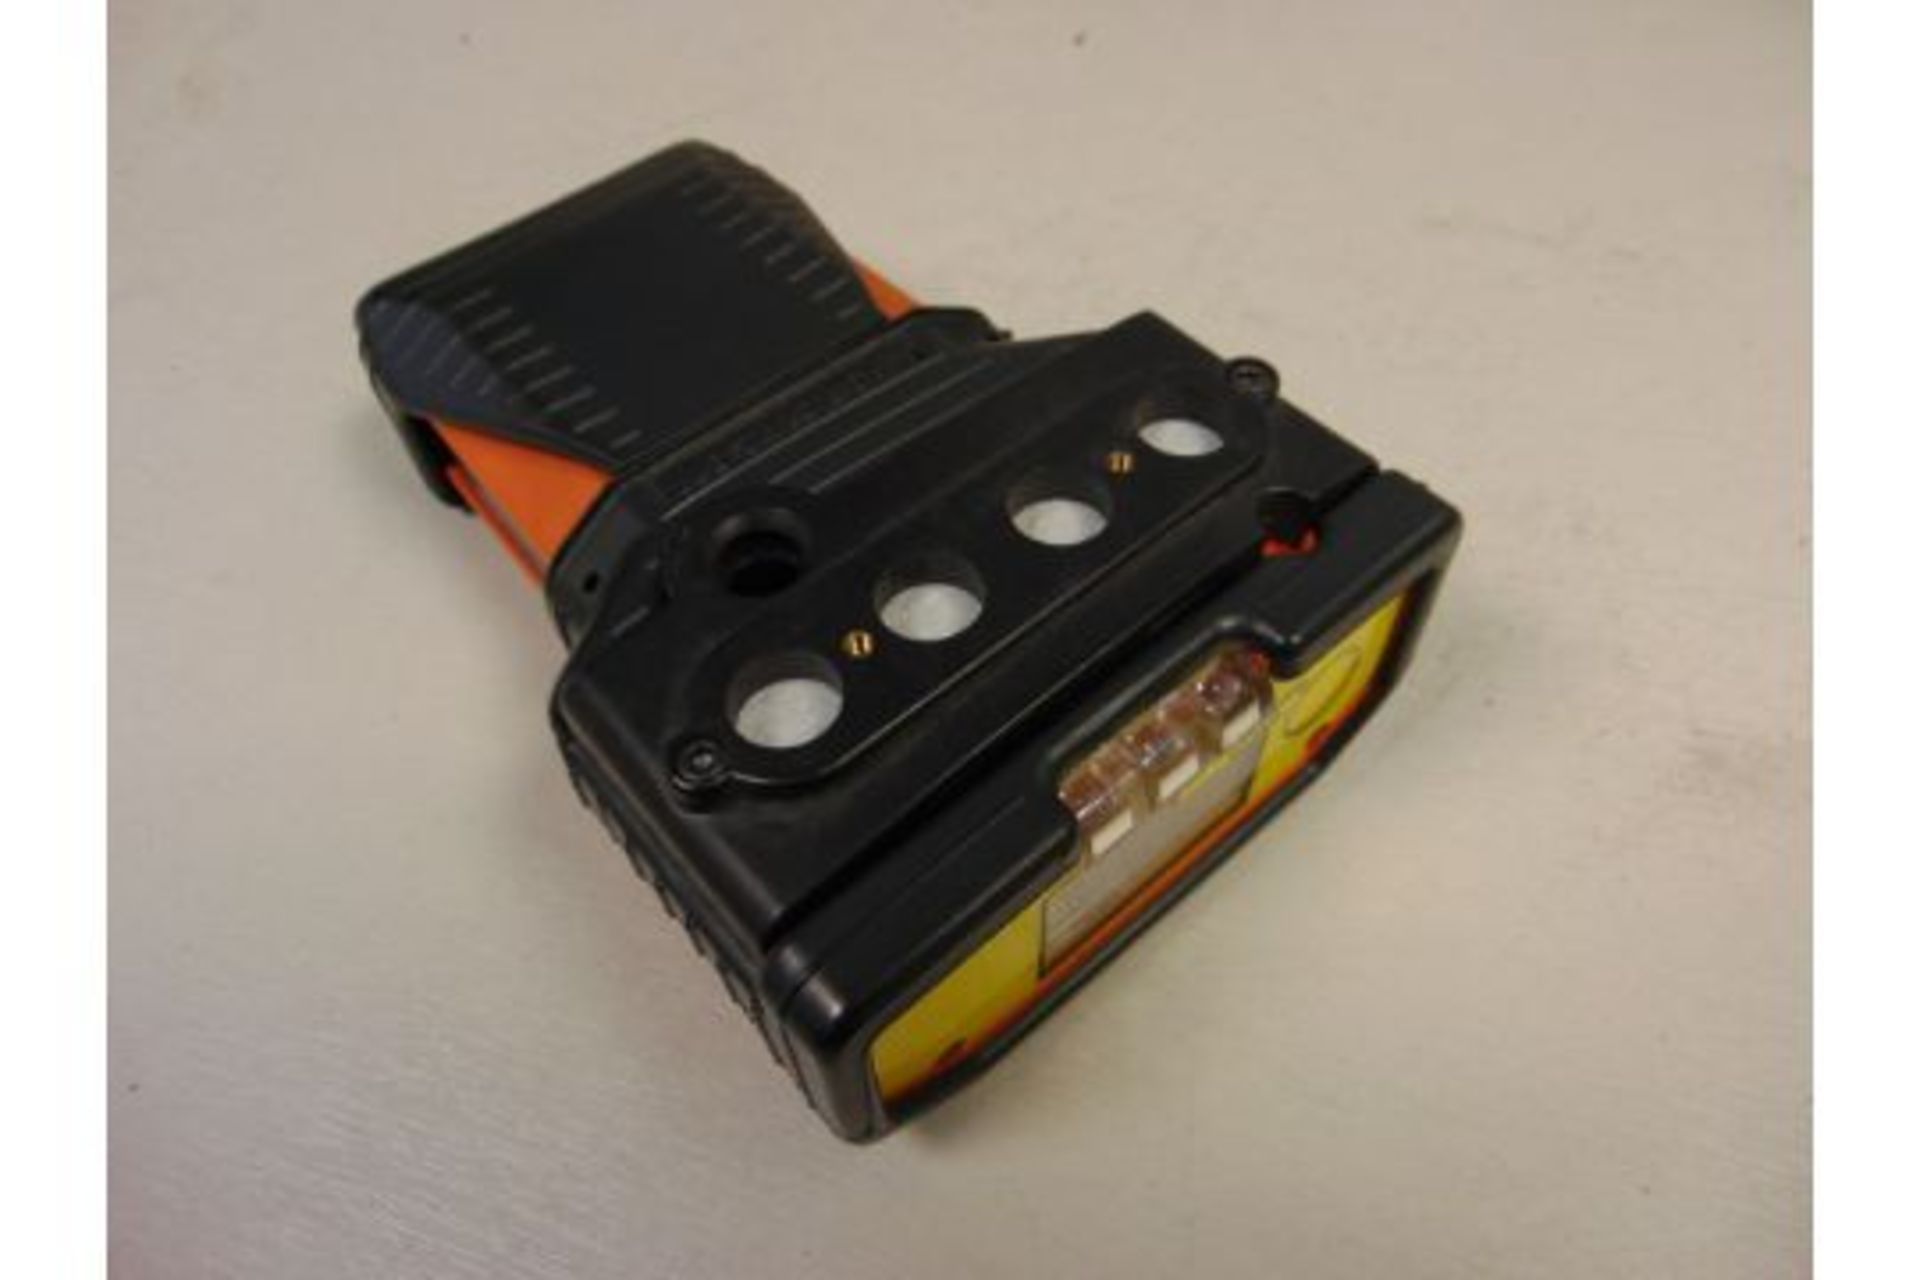 Crowcon Custodian CDL Portable Gas Monitor Kit - Image 2 of 4